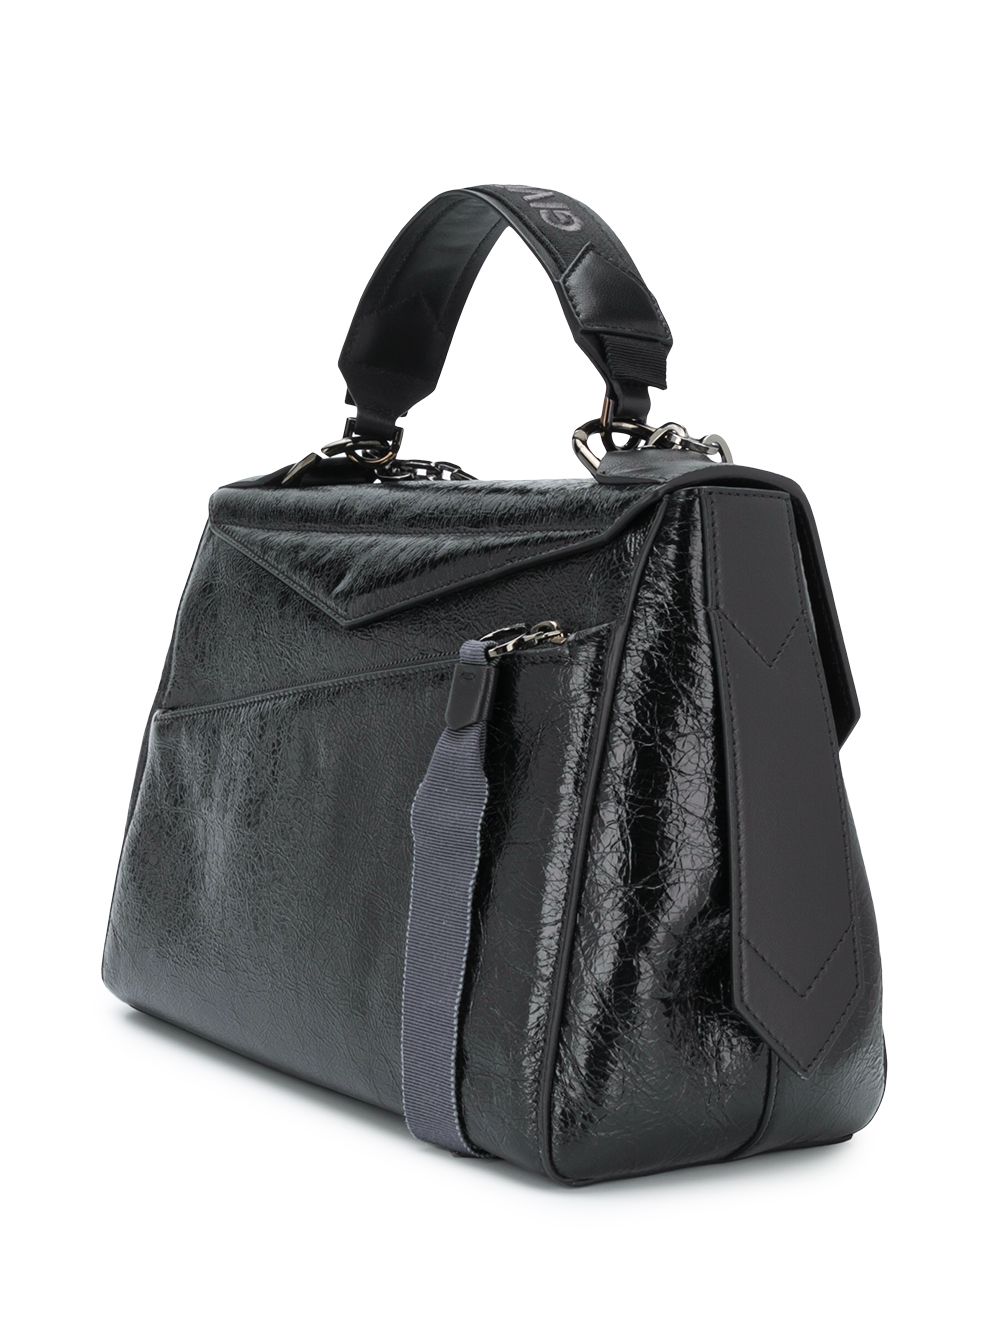 фото Givenchy сумка на плечо среднего размера с металлическим логотипом